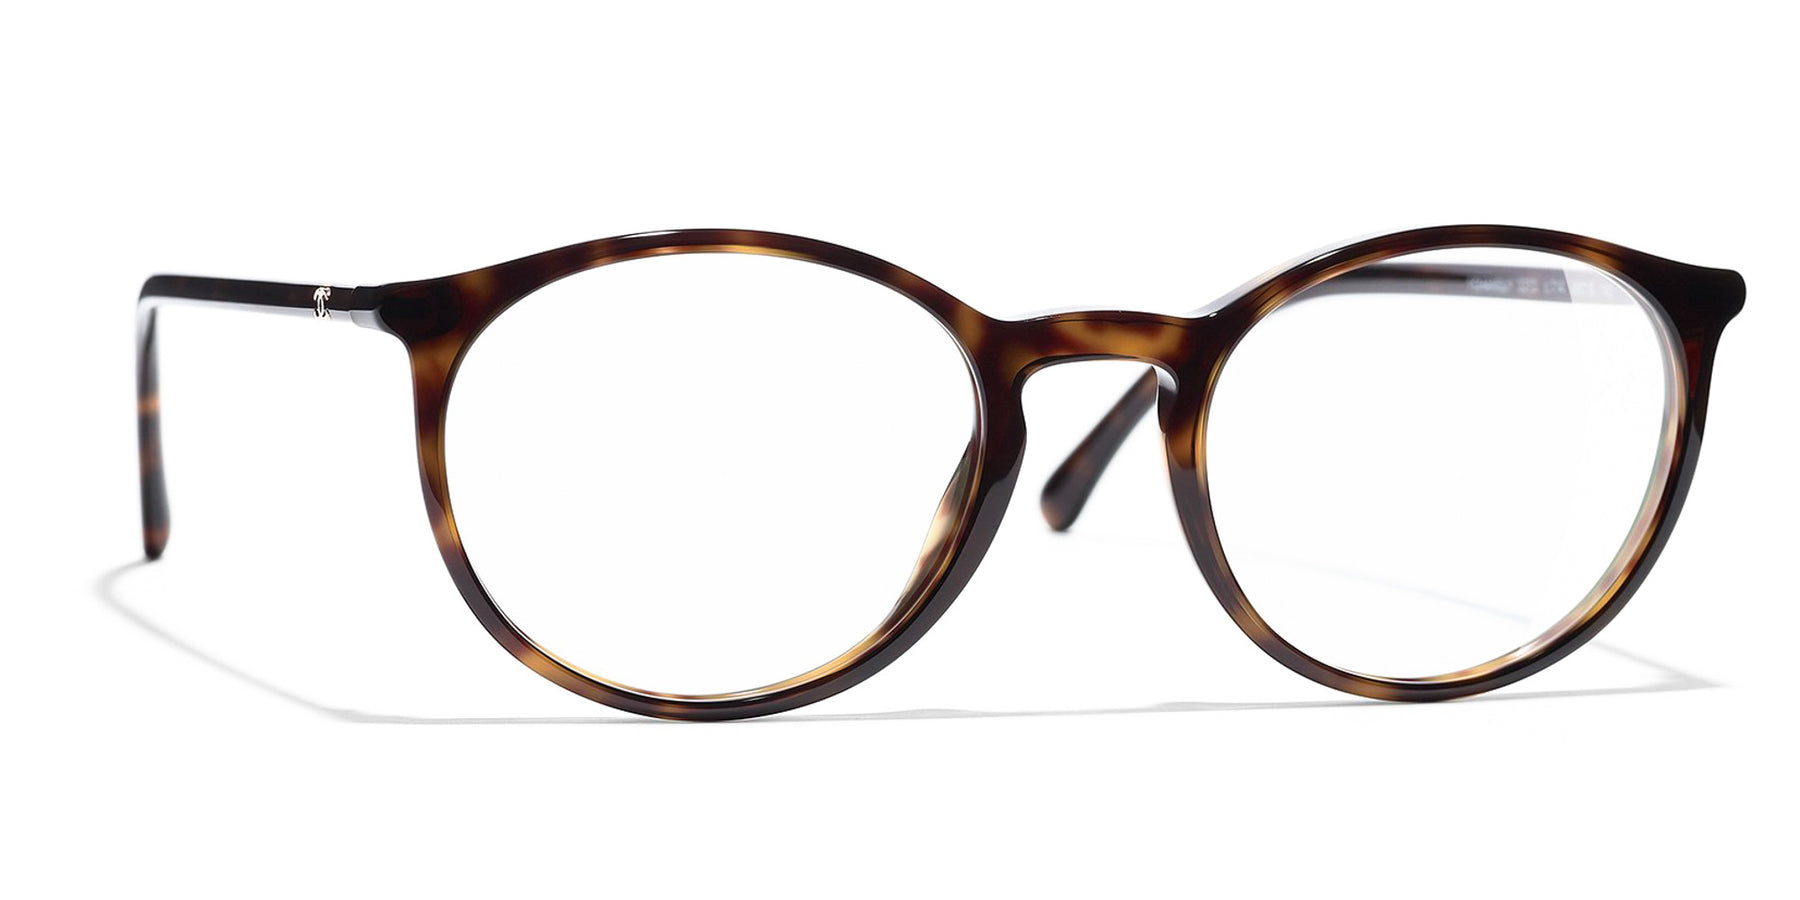 Chanel Pantos eyeglasses - ShopStyle Sunglasses